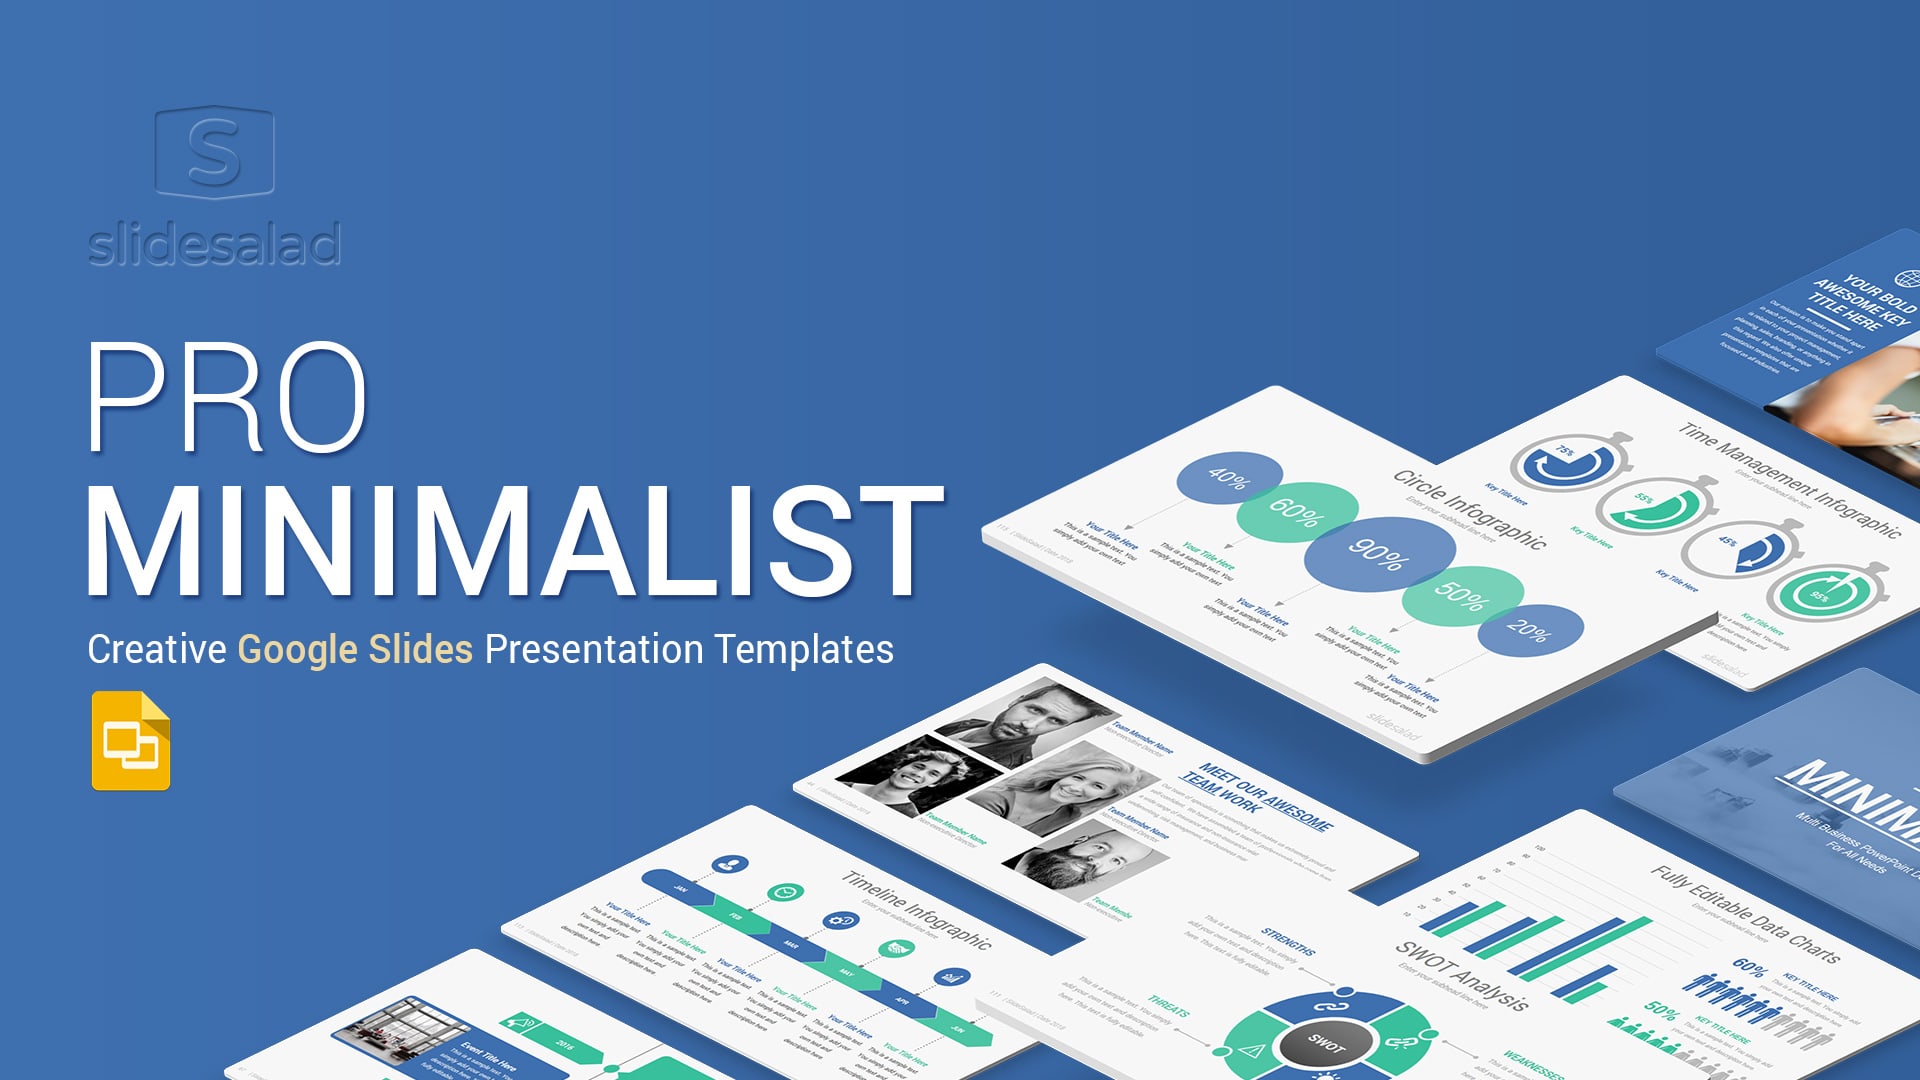 Pro Minimalist Google Slides Template Designs – Professional Google Slides Themes for Business Presentations